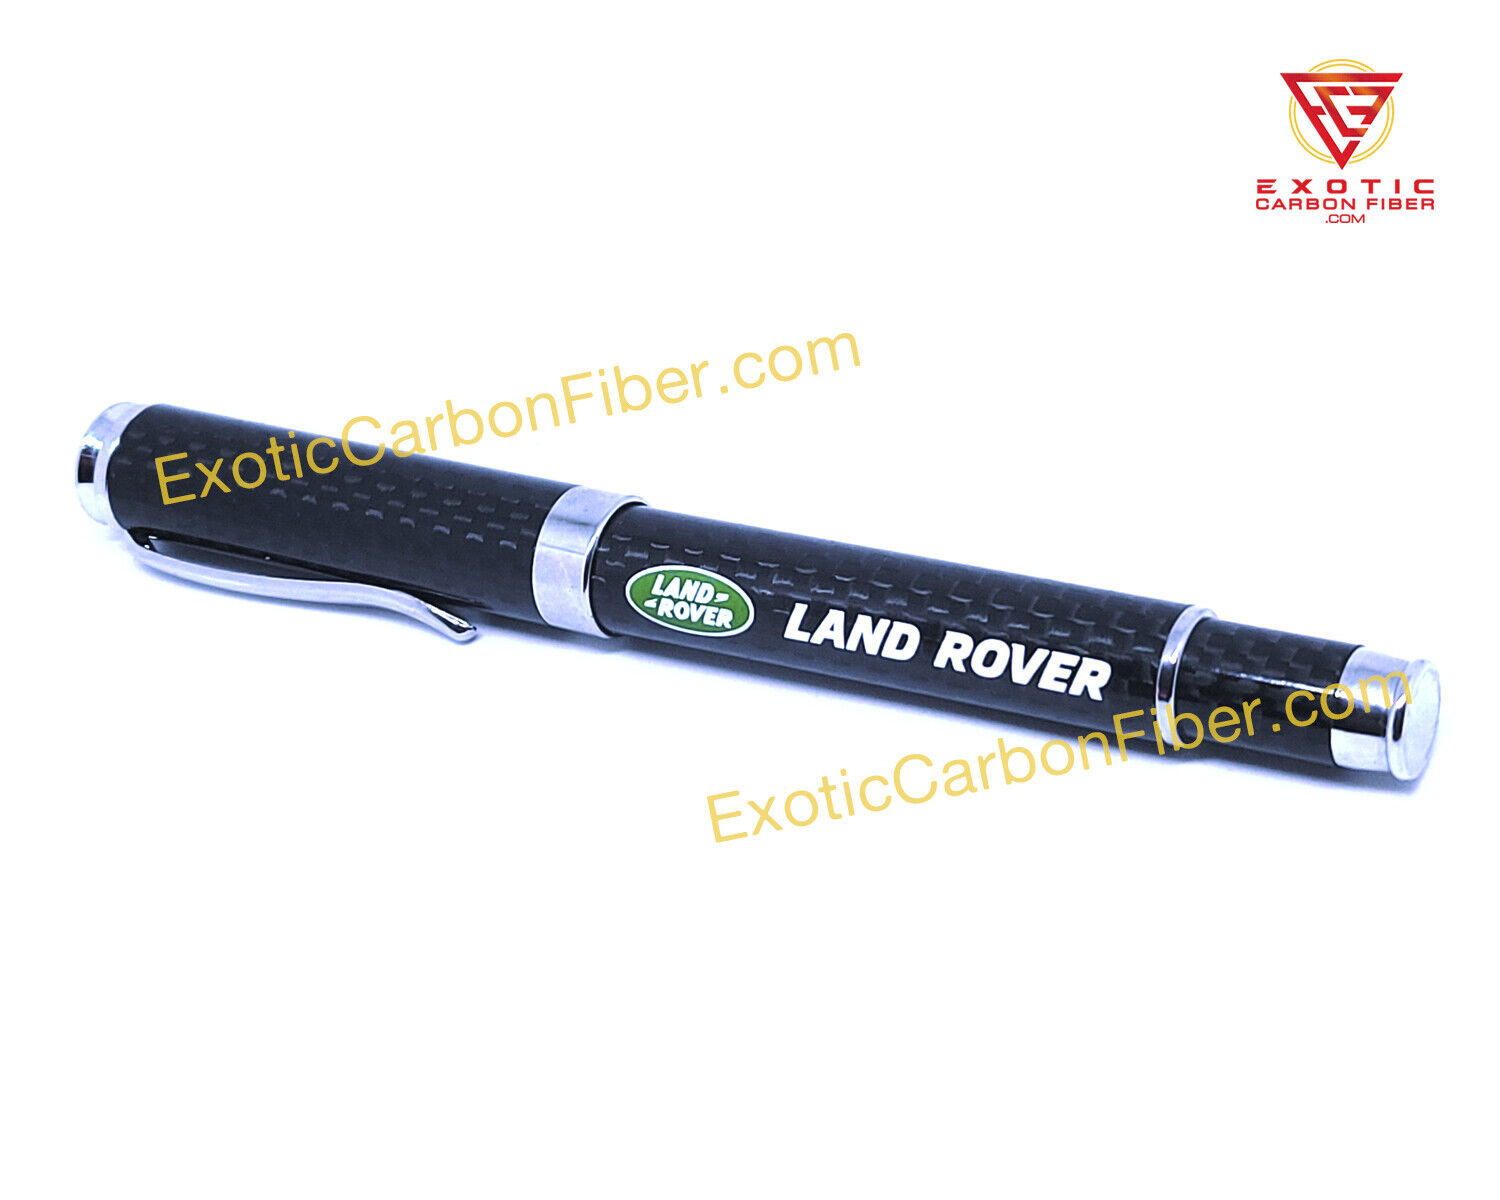 Land Rover Green Logo Carbon Fiber Ballpoint Pen - GREAT GIFT